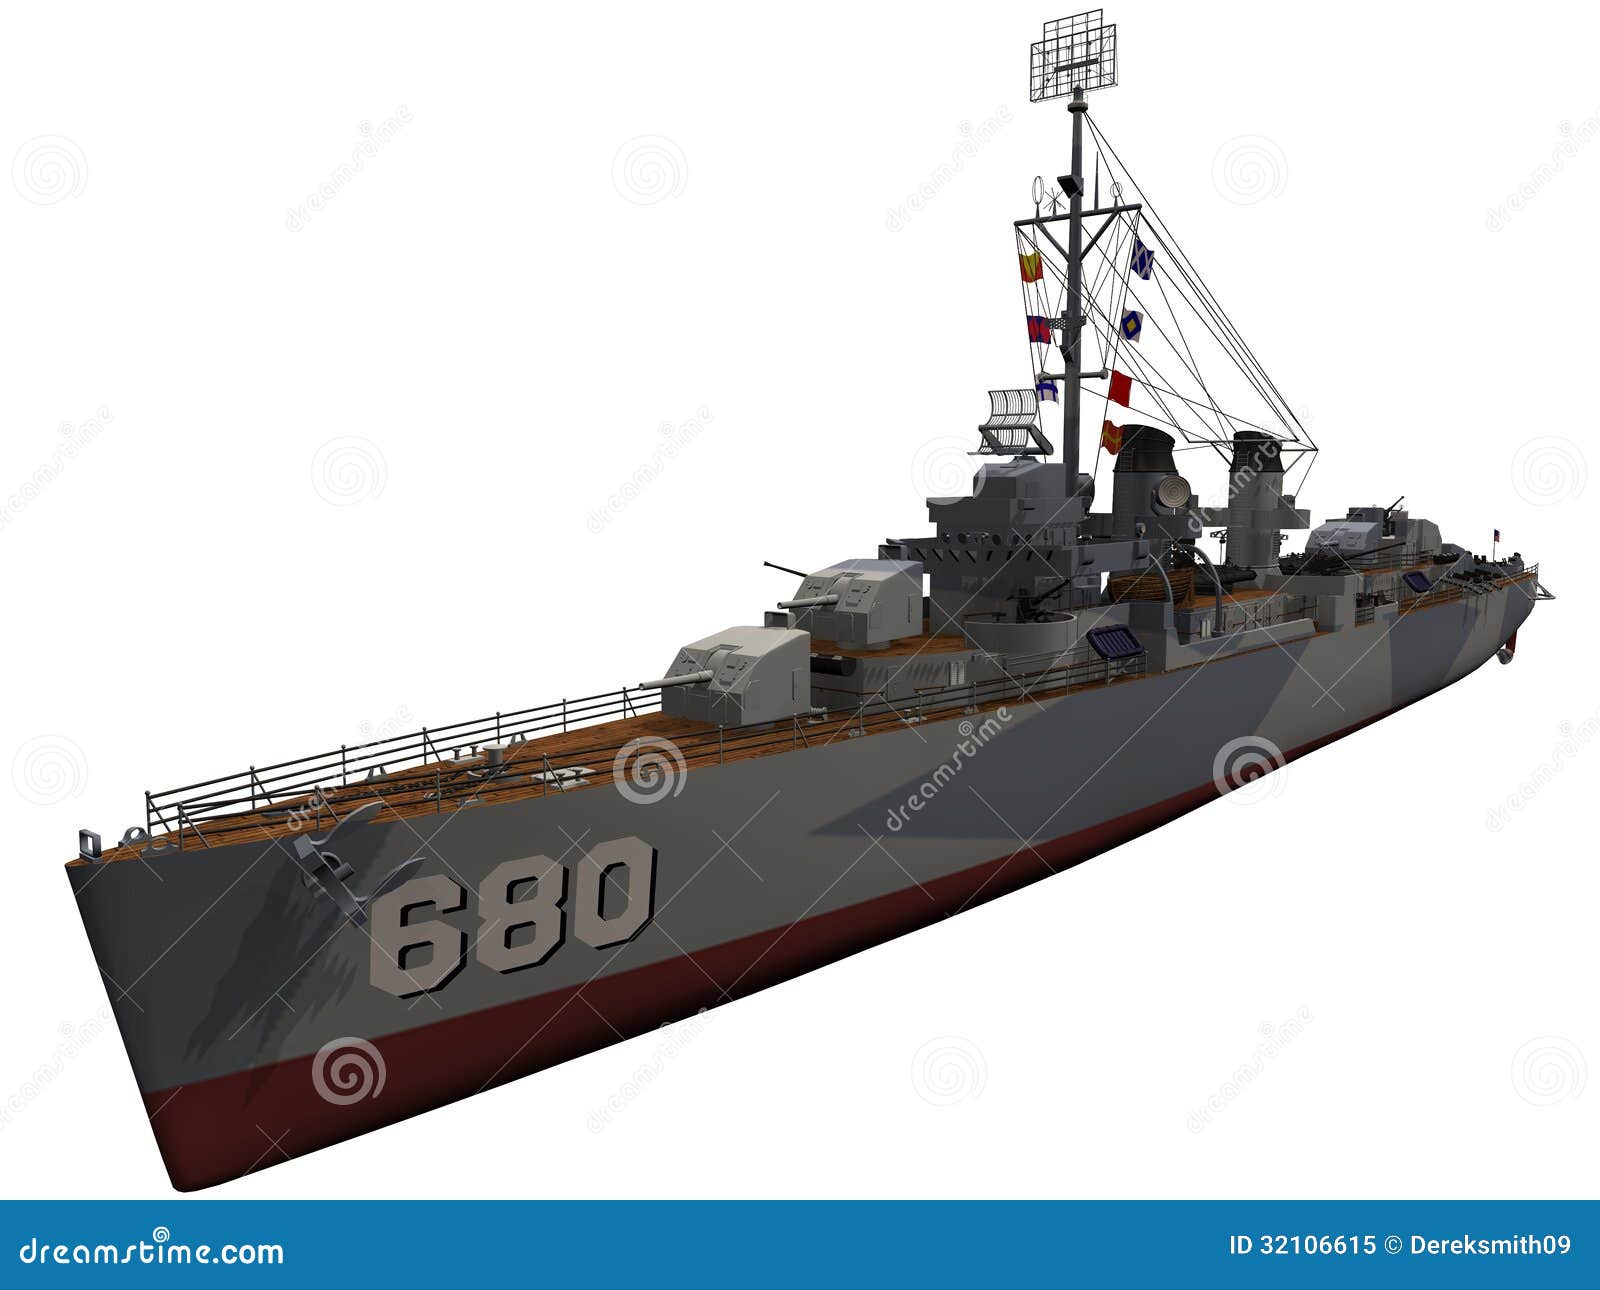 3d rendering of a ww2 era destroyer